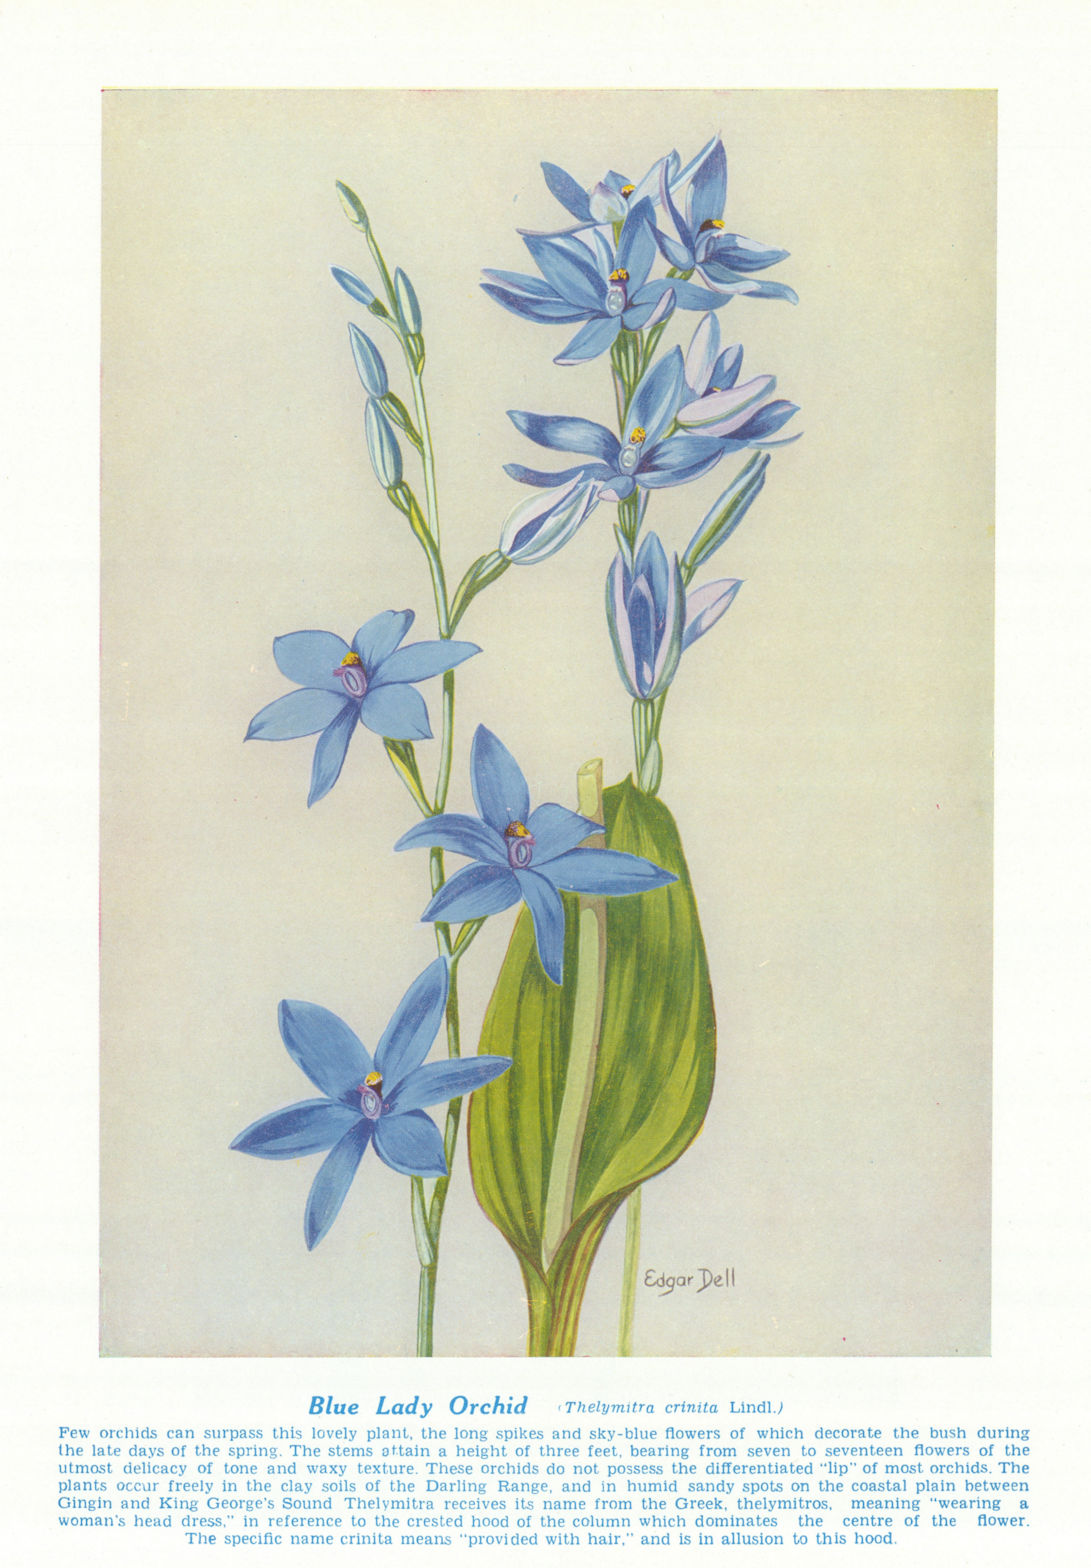 Blue Lady Orchid (Thelymitra crinita). West Australian Wild Flowers 1950 print